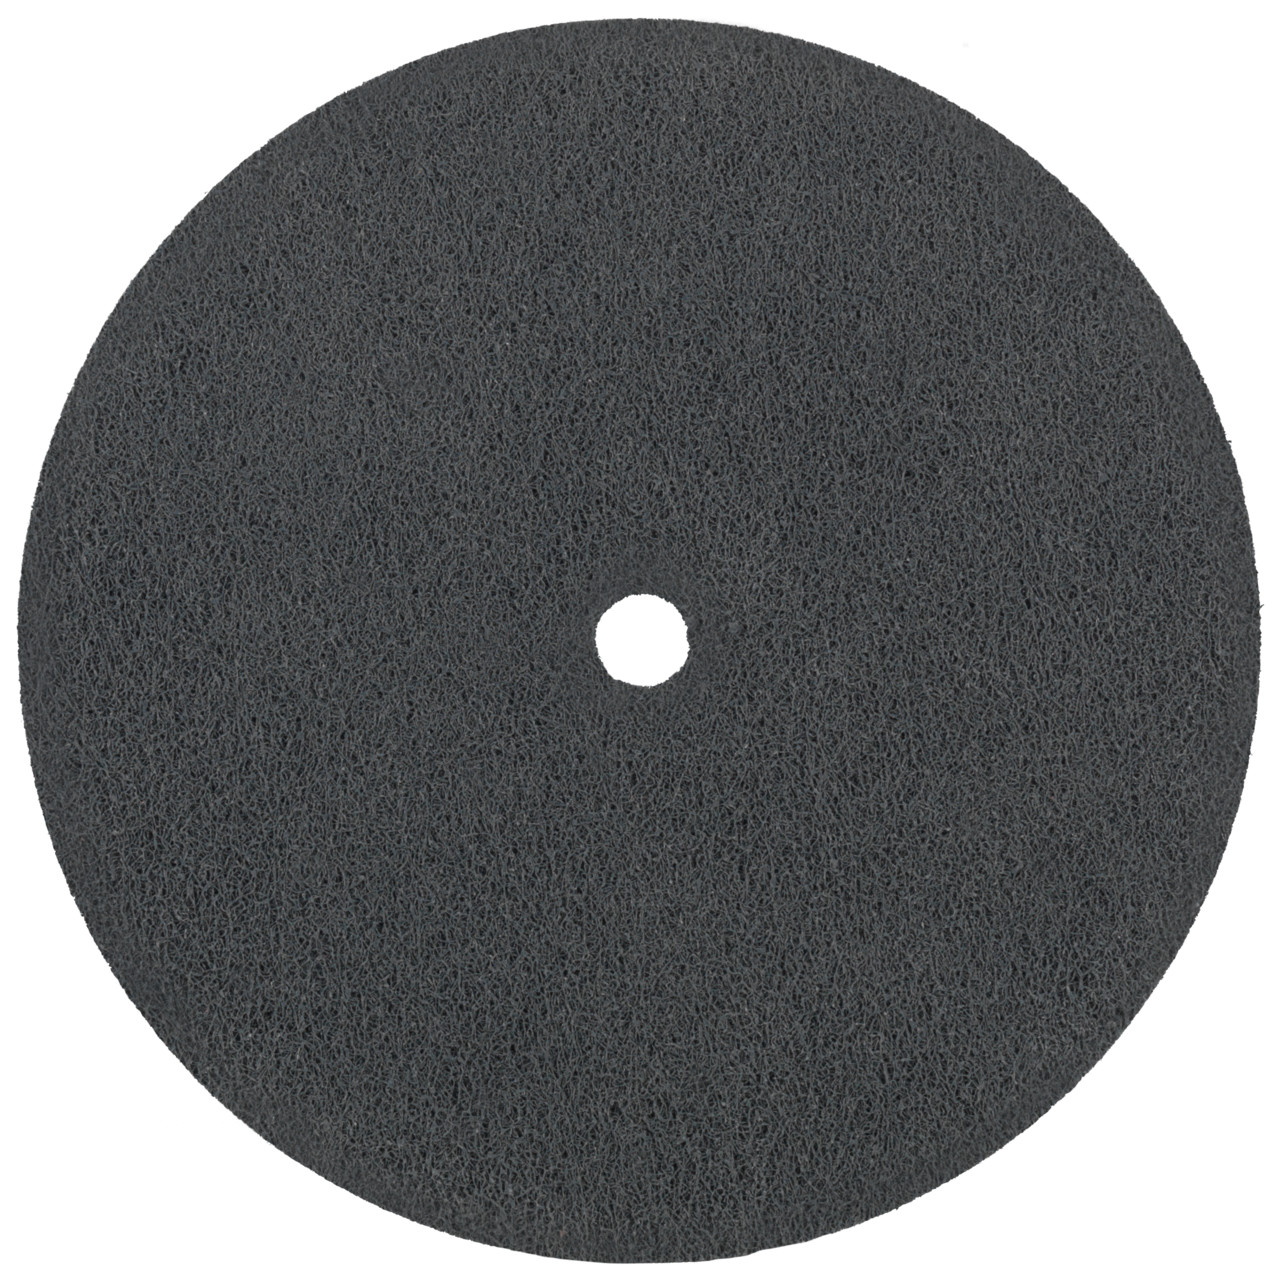 Tyrolit Discos compactos prensados DxDxH 152x25x12,7 Inserto universal, 6 C FEIN, forma: 1, Art. 34190302